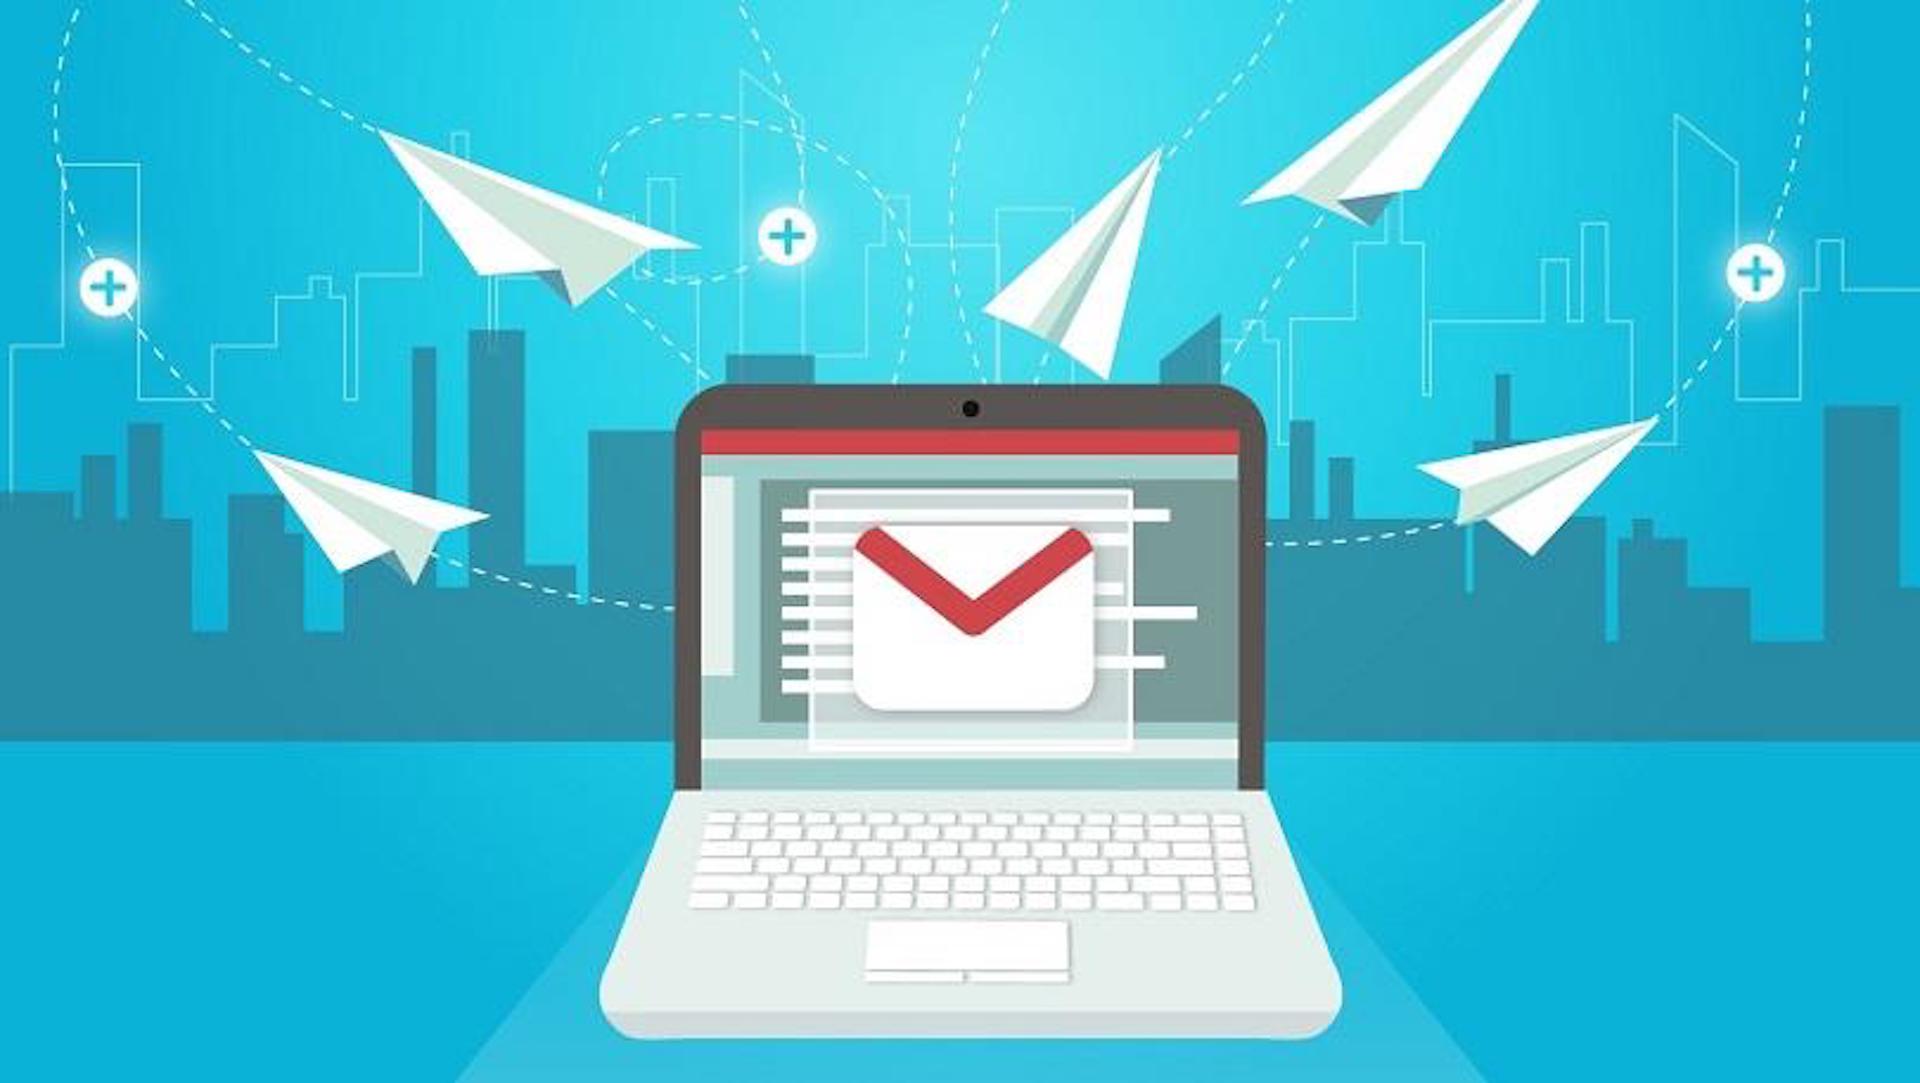 Email marketing webinar: Find the right platform